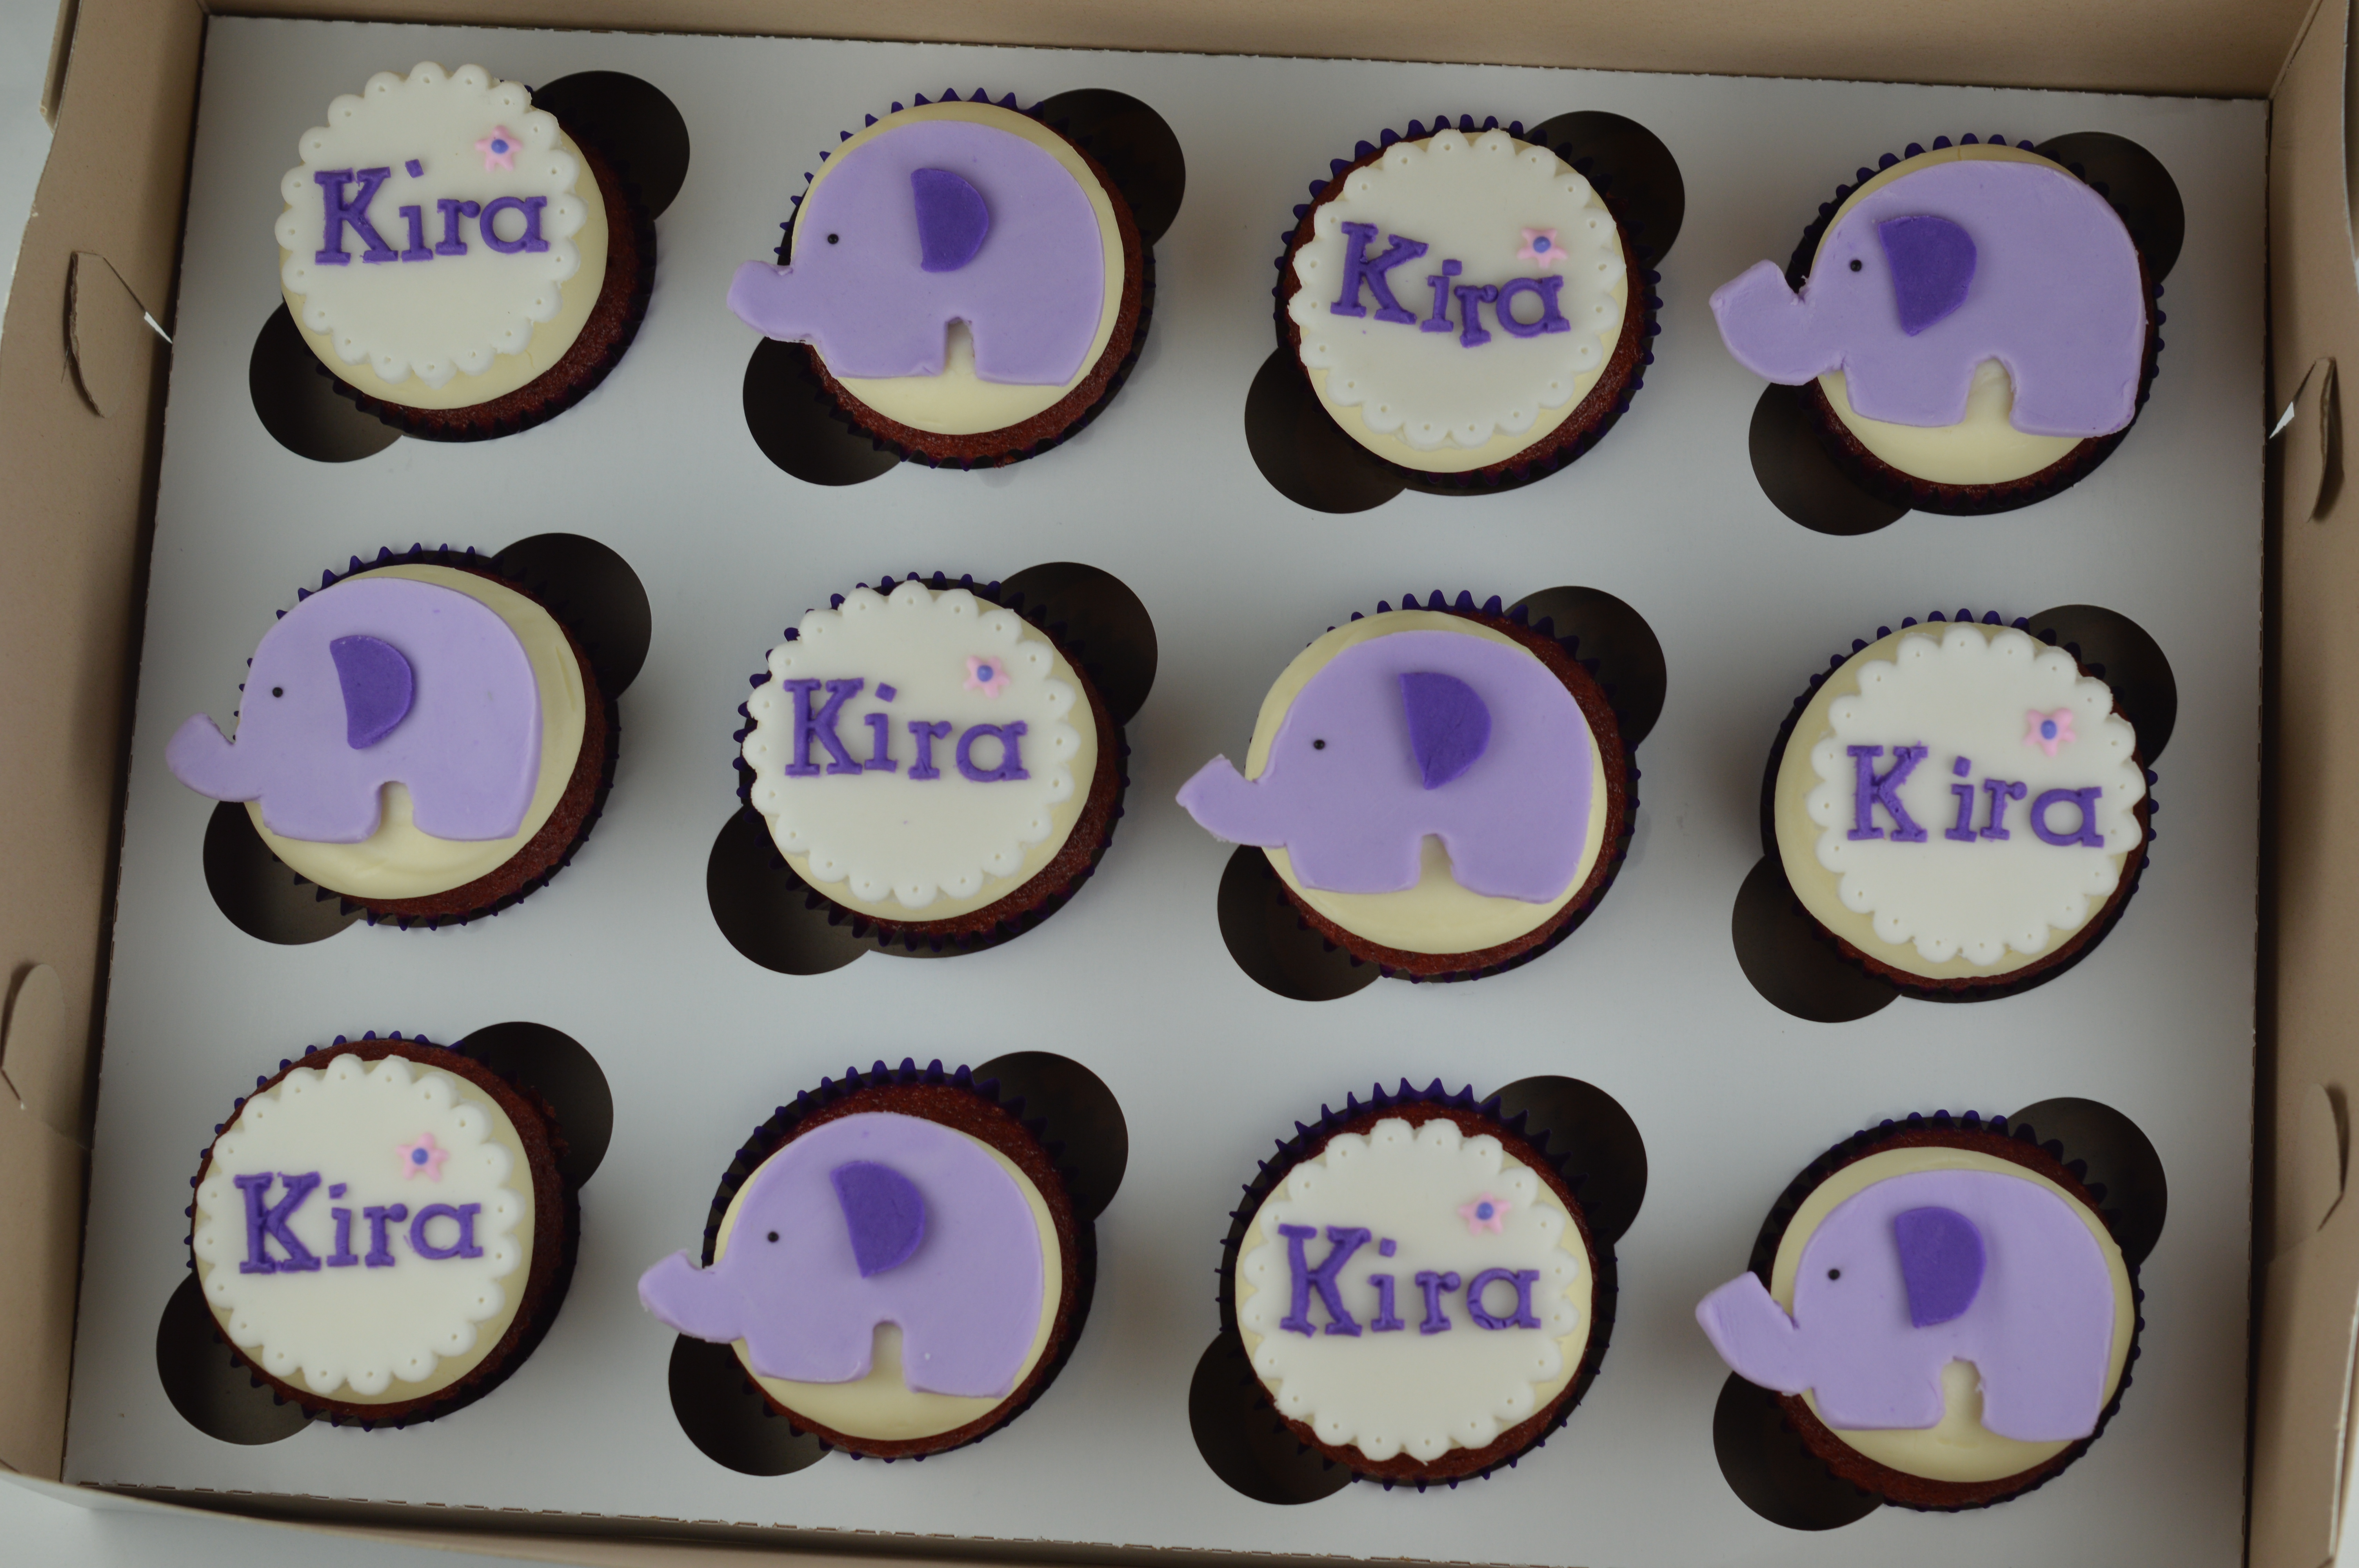 purple baby shower cupcakes